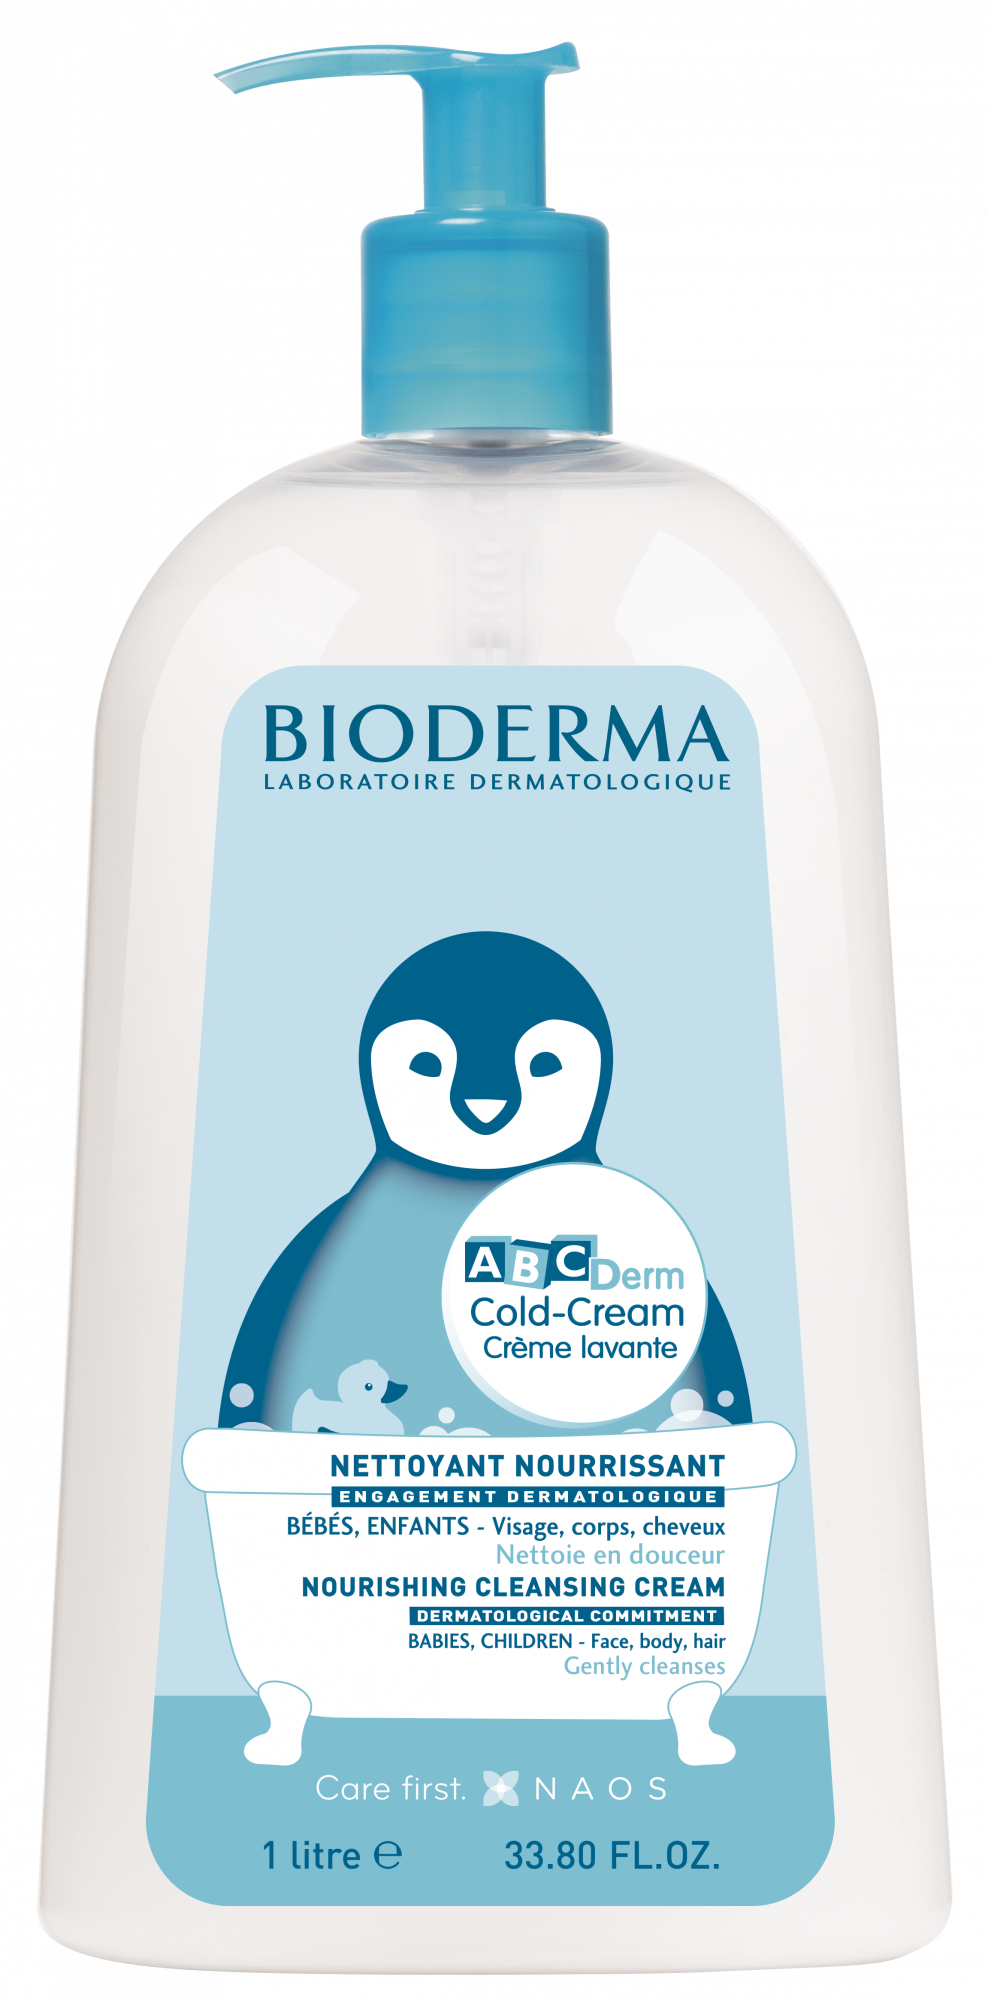  Bioderma ABCDerm Nourishing Cleansing Cream